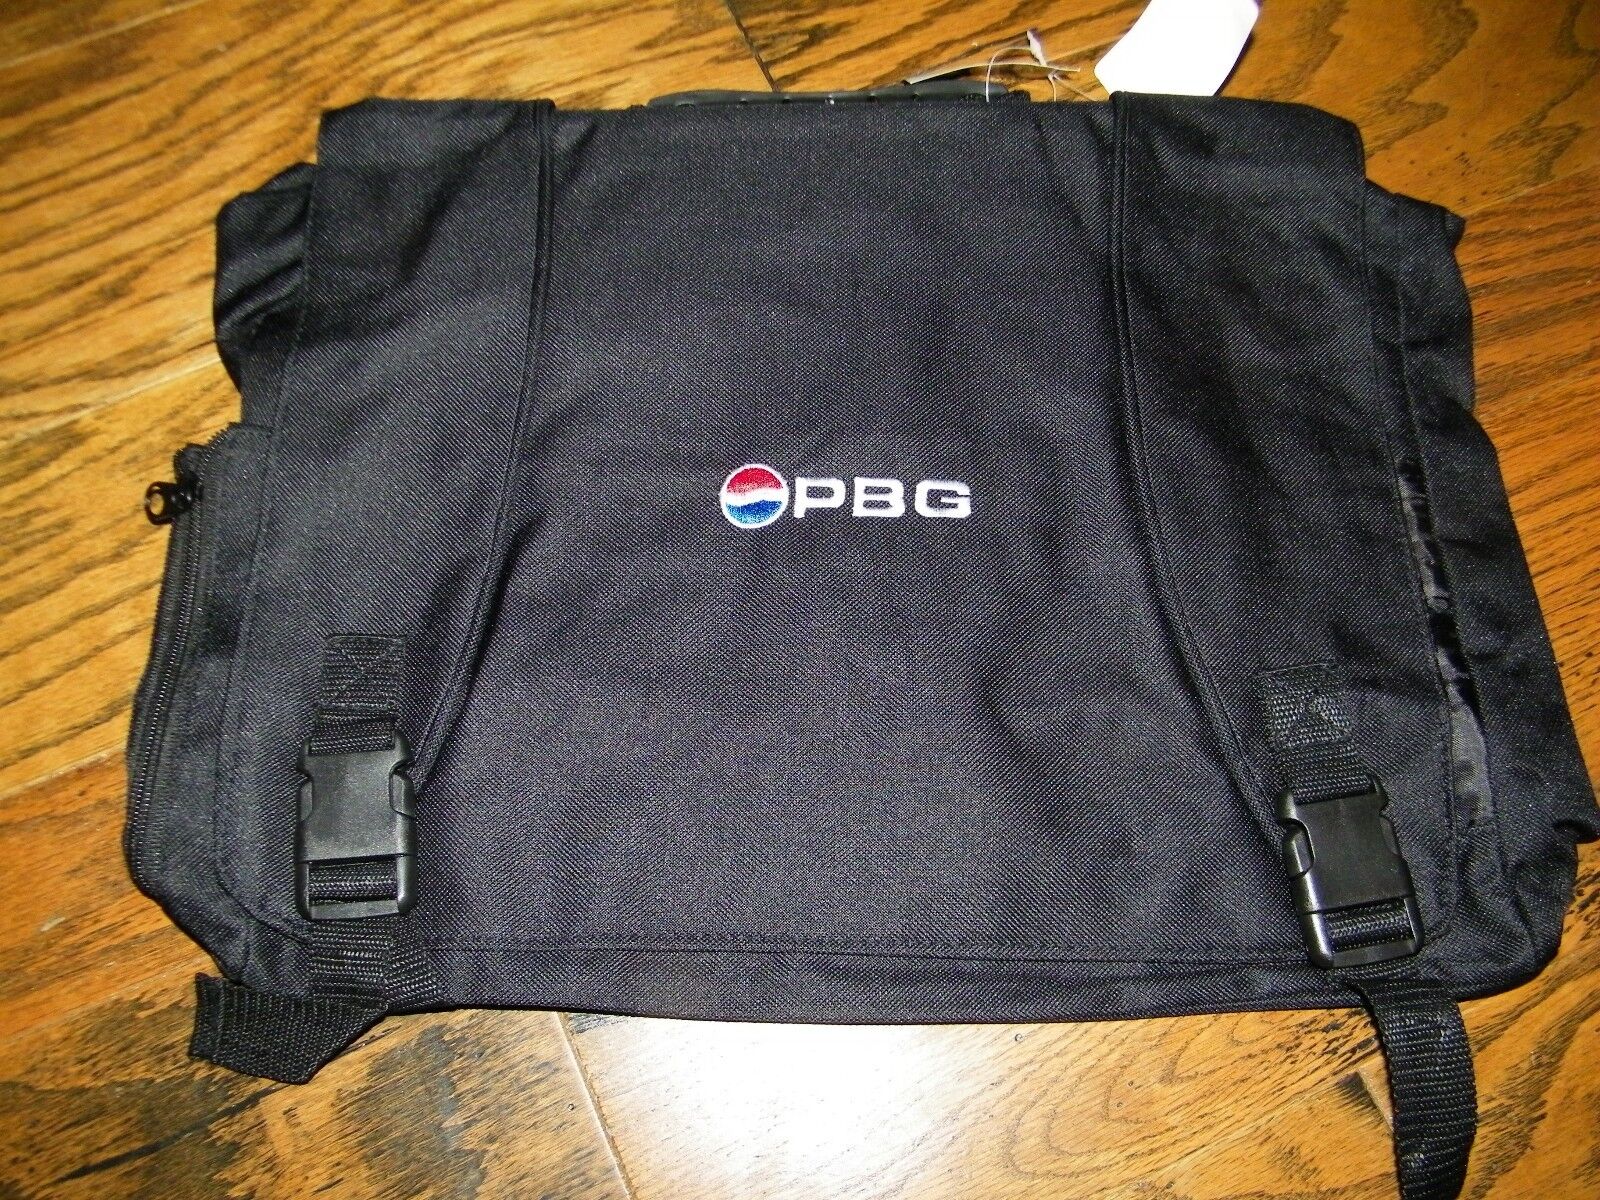 PBG Messenger Bag Laptop Bag with handle and strap Travelwell NWT Pepsi cola